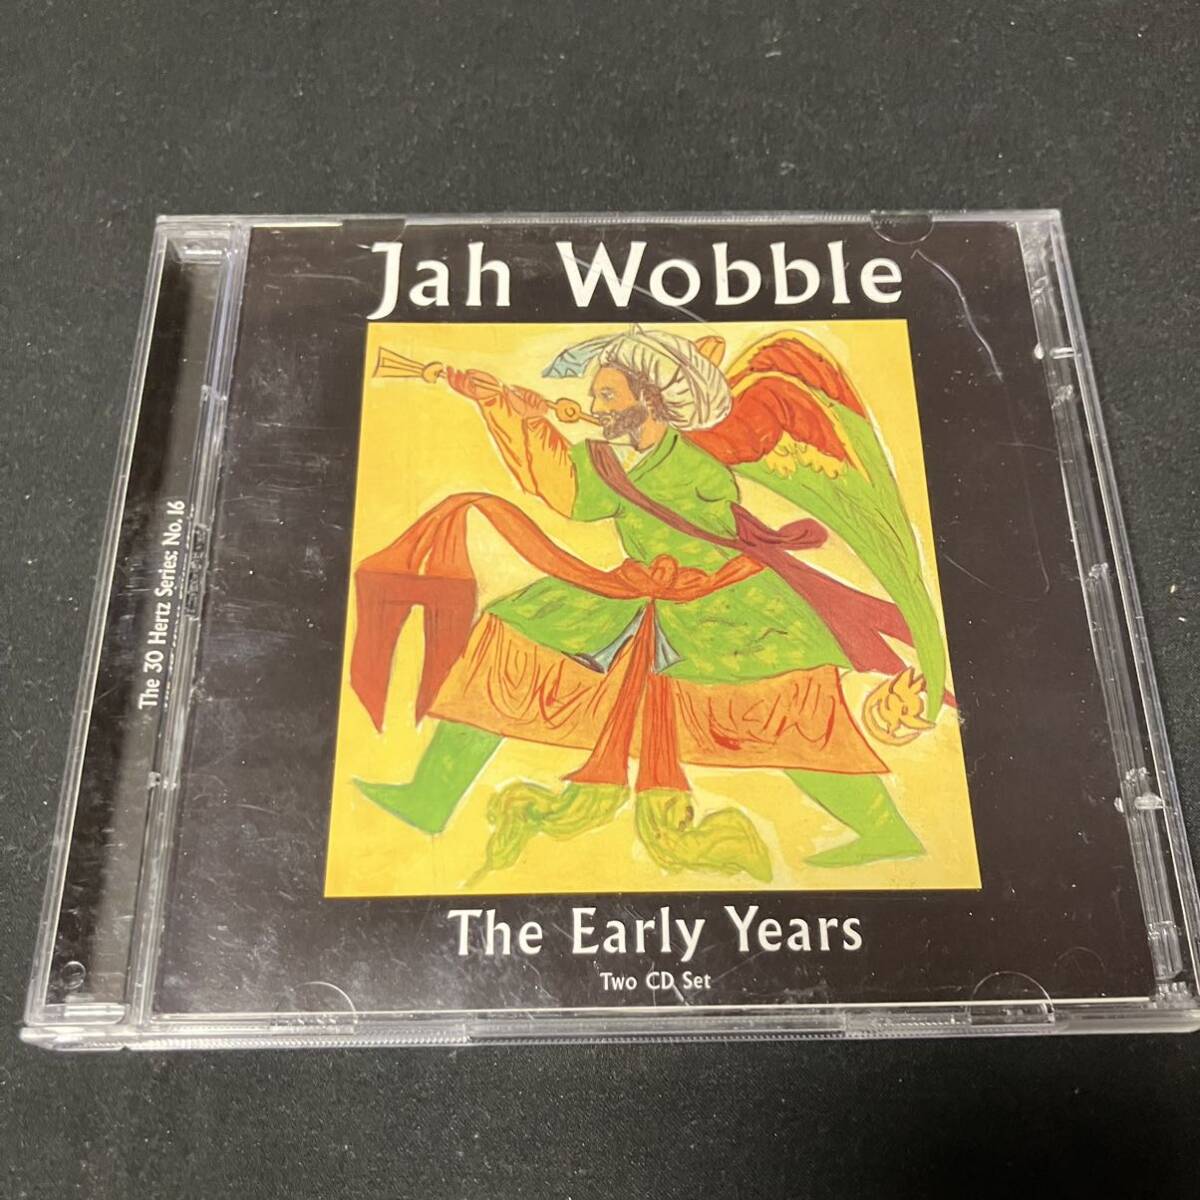 S14g CD ジャーウォブル JAH WOBBLE EARLY YEARS (2CD)_画像1